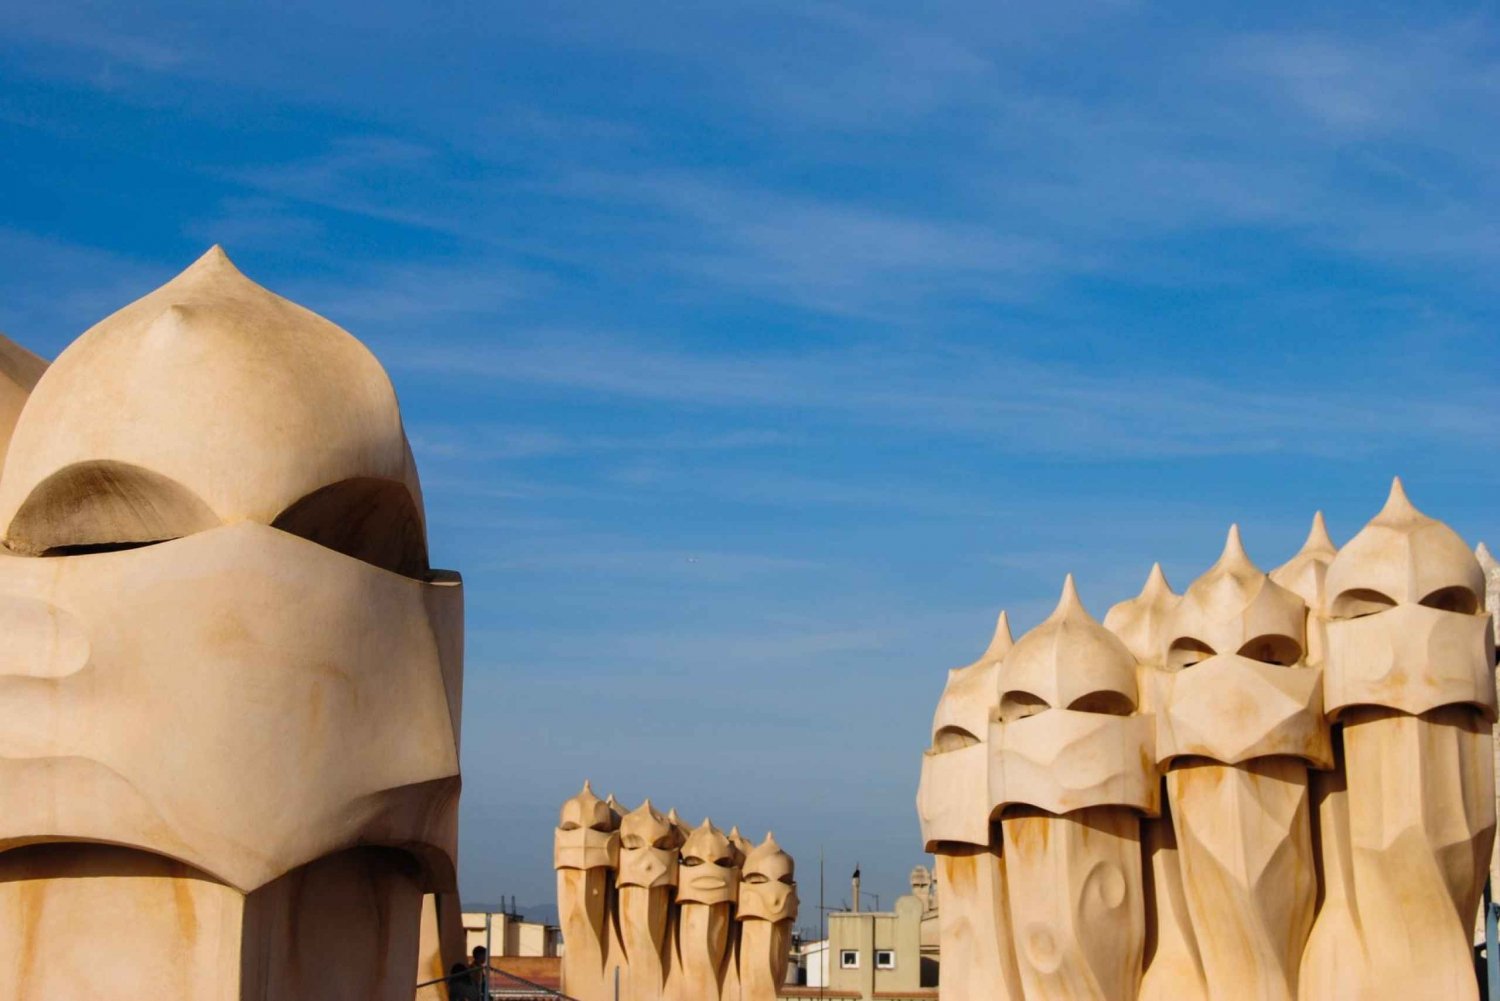 Les maisons de Gaudi : Casa Mila Casa & Vicens billet skip-the-line